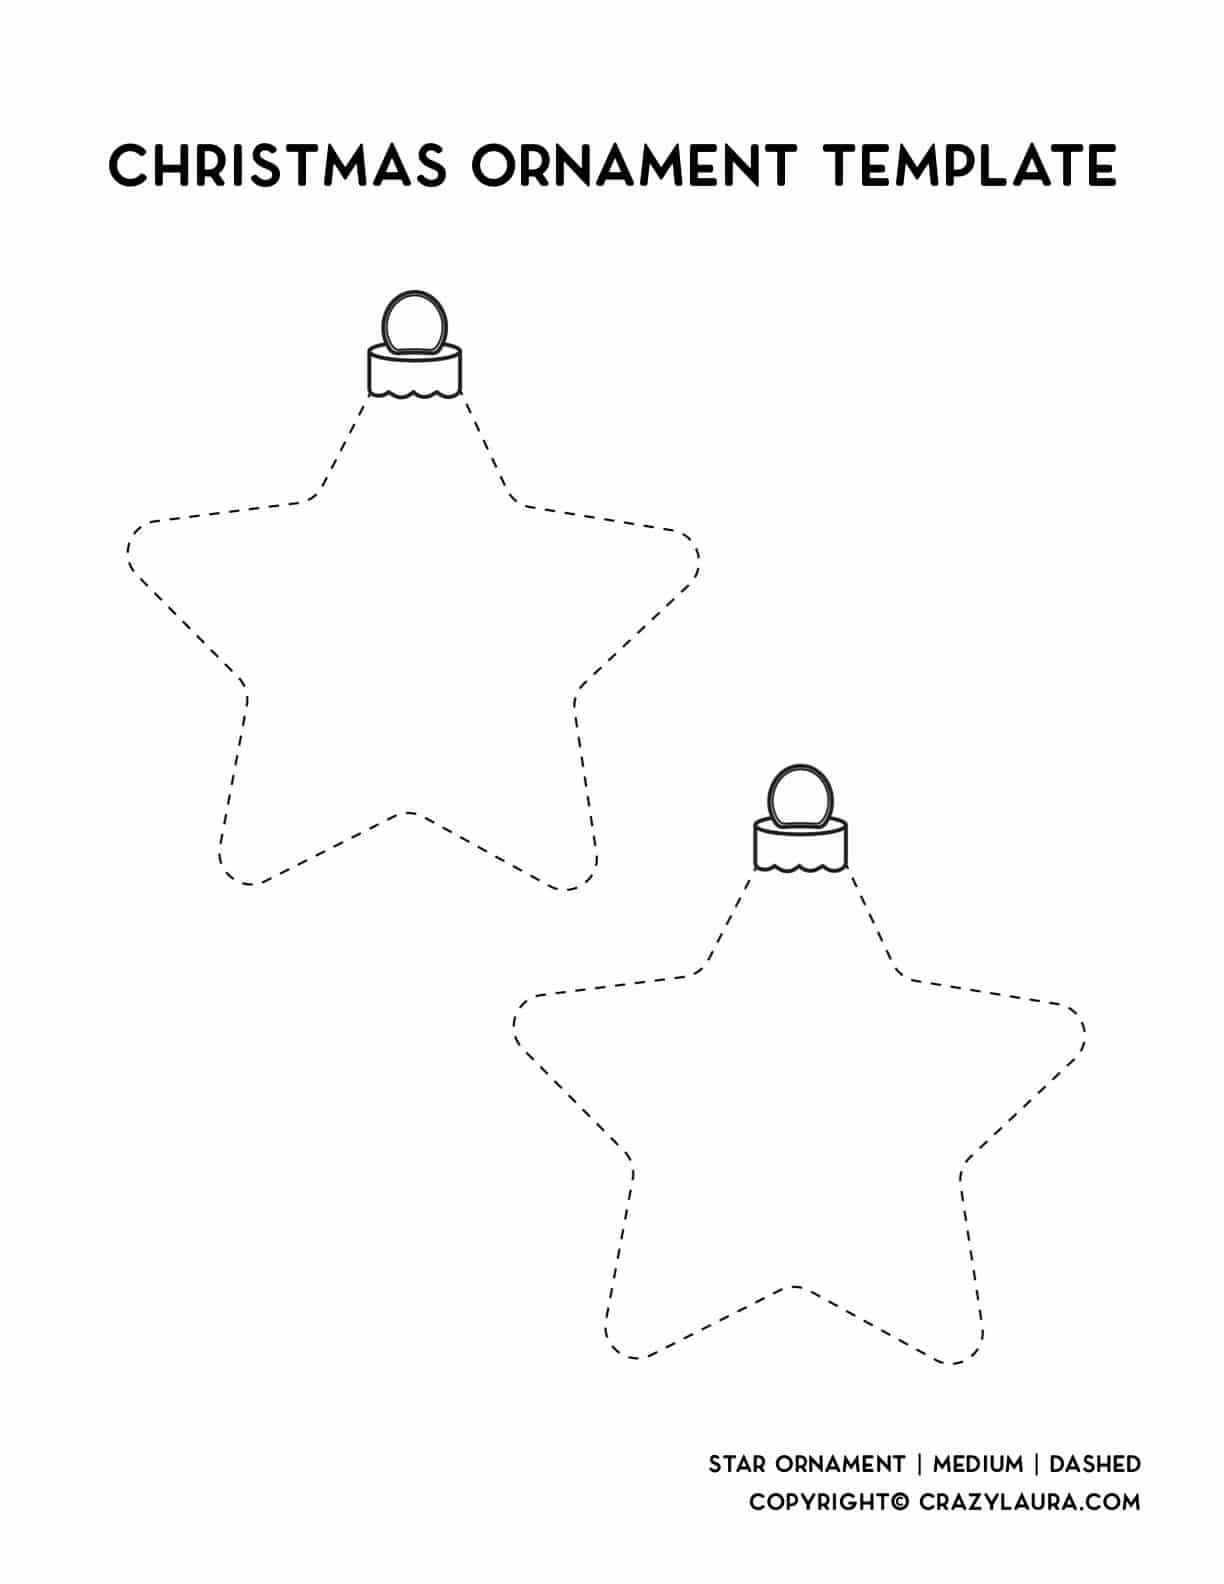 dashed line free pdf star ornament